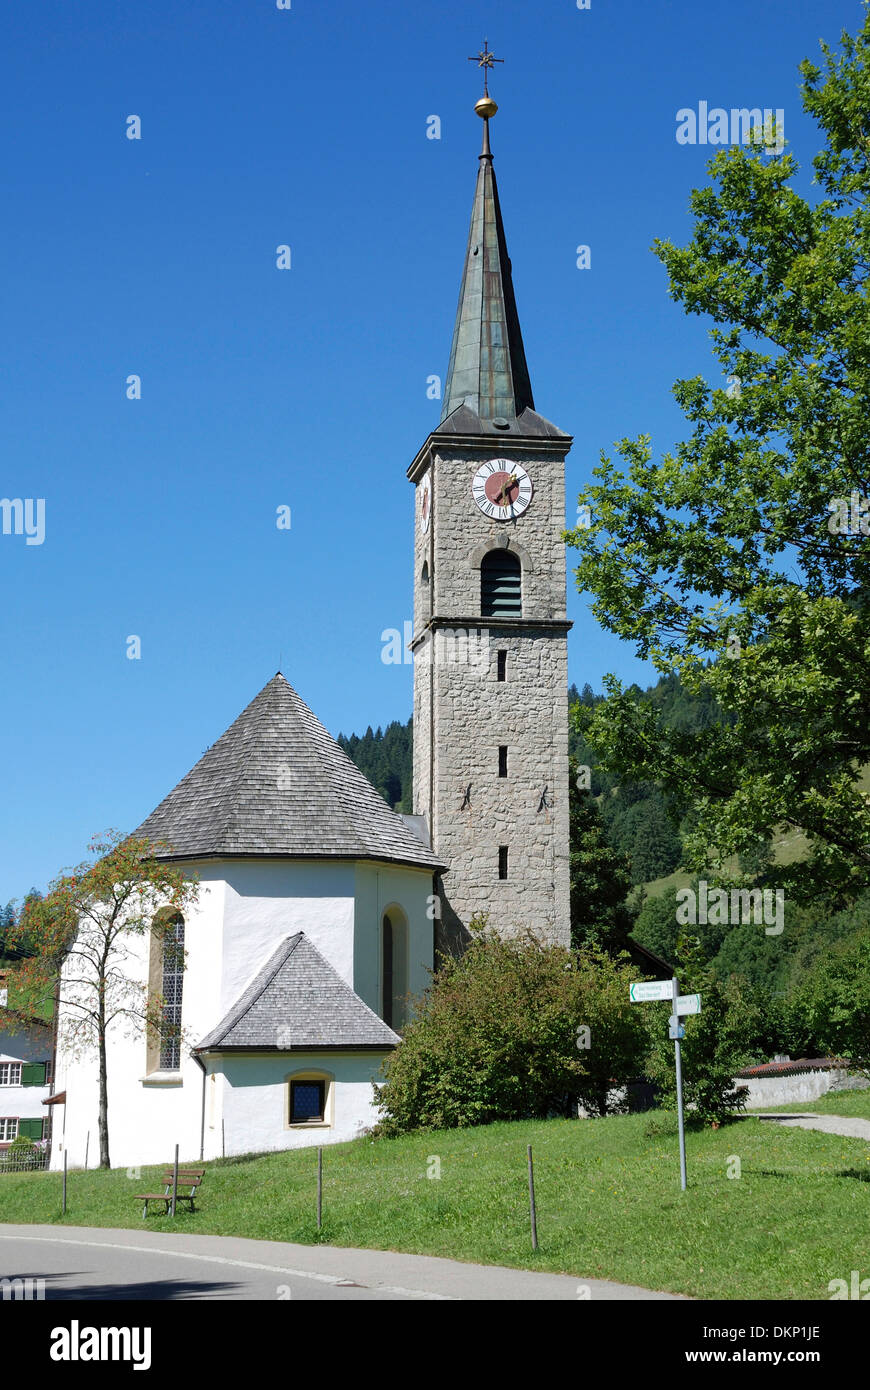 Village church of Hinterstein in the Allgaeu Alps. Stock Photo